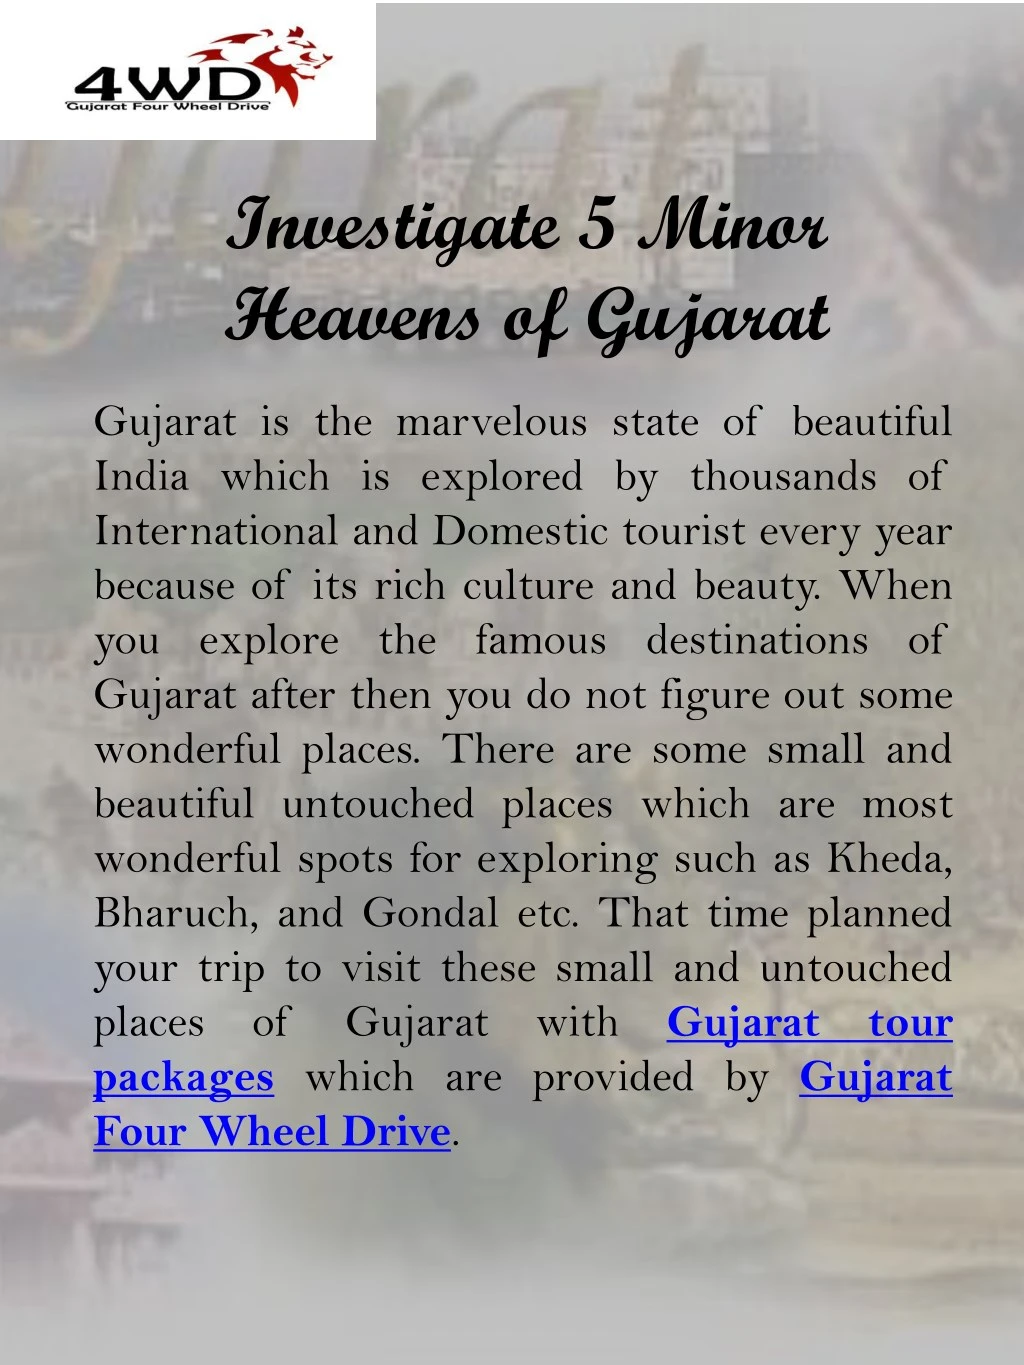 investigate 5 minor heavens of gujarat